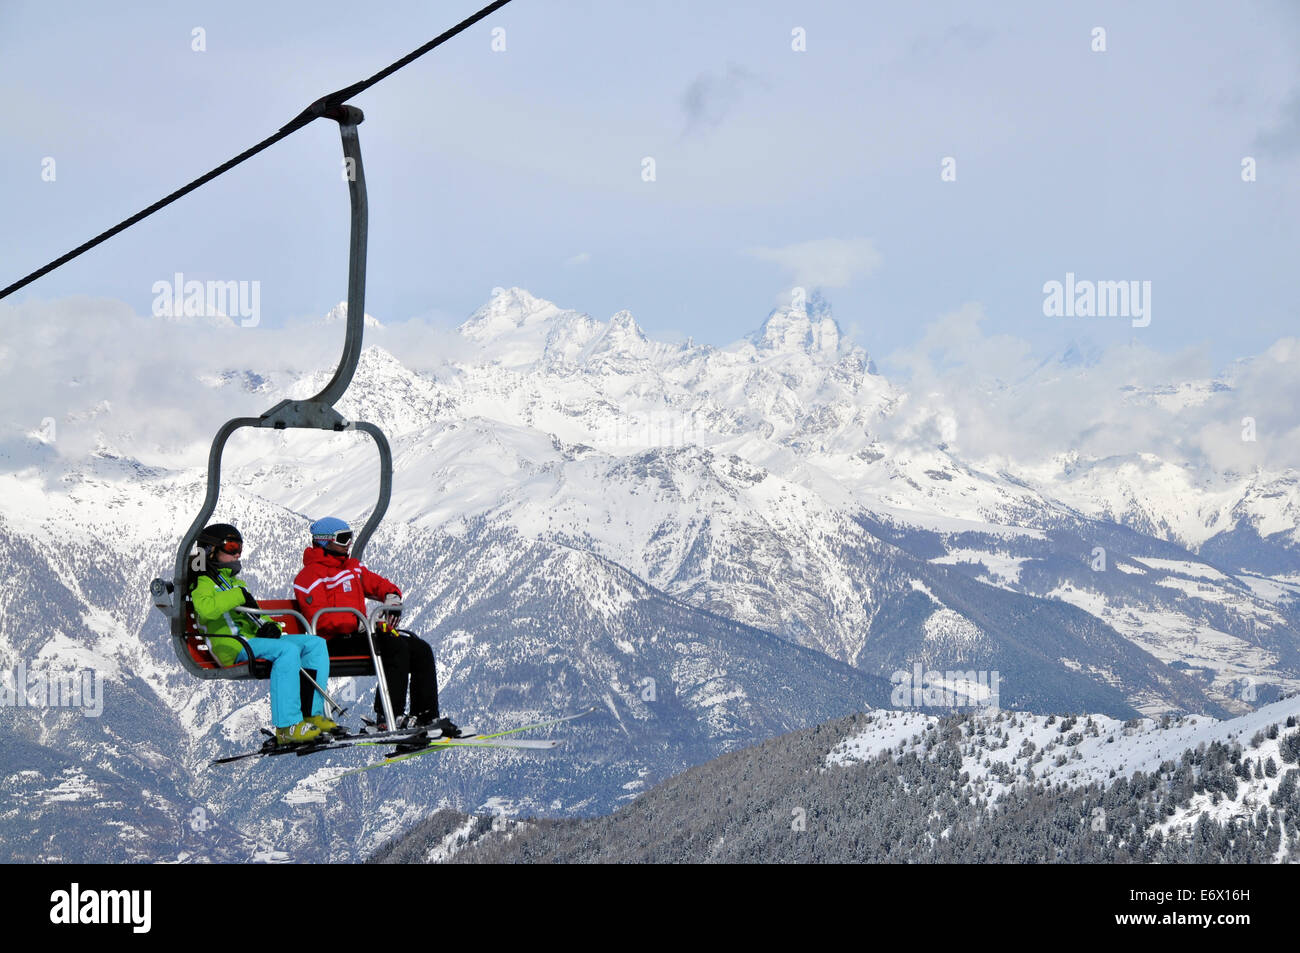 Two people in a ski lift, Pila ski resort, Aosta with Matterhorn, Aosta Valley, Italy Stock Photo